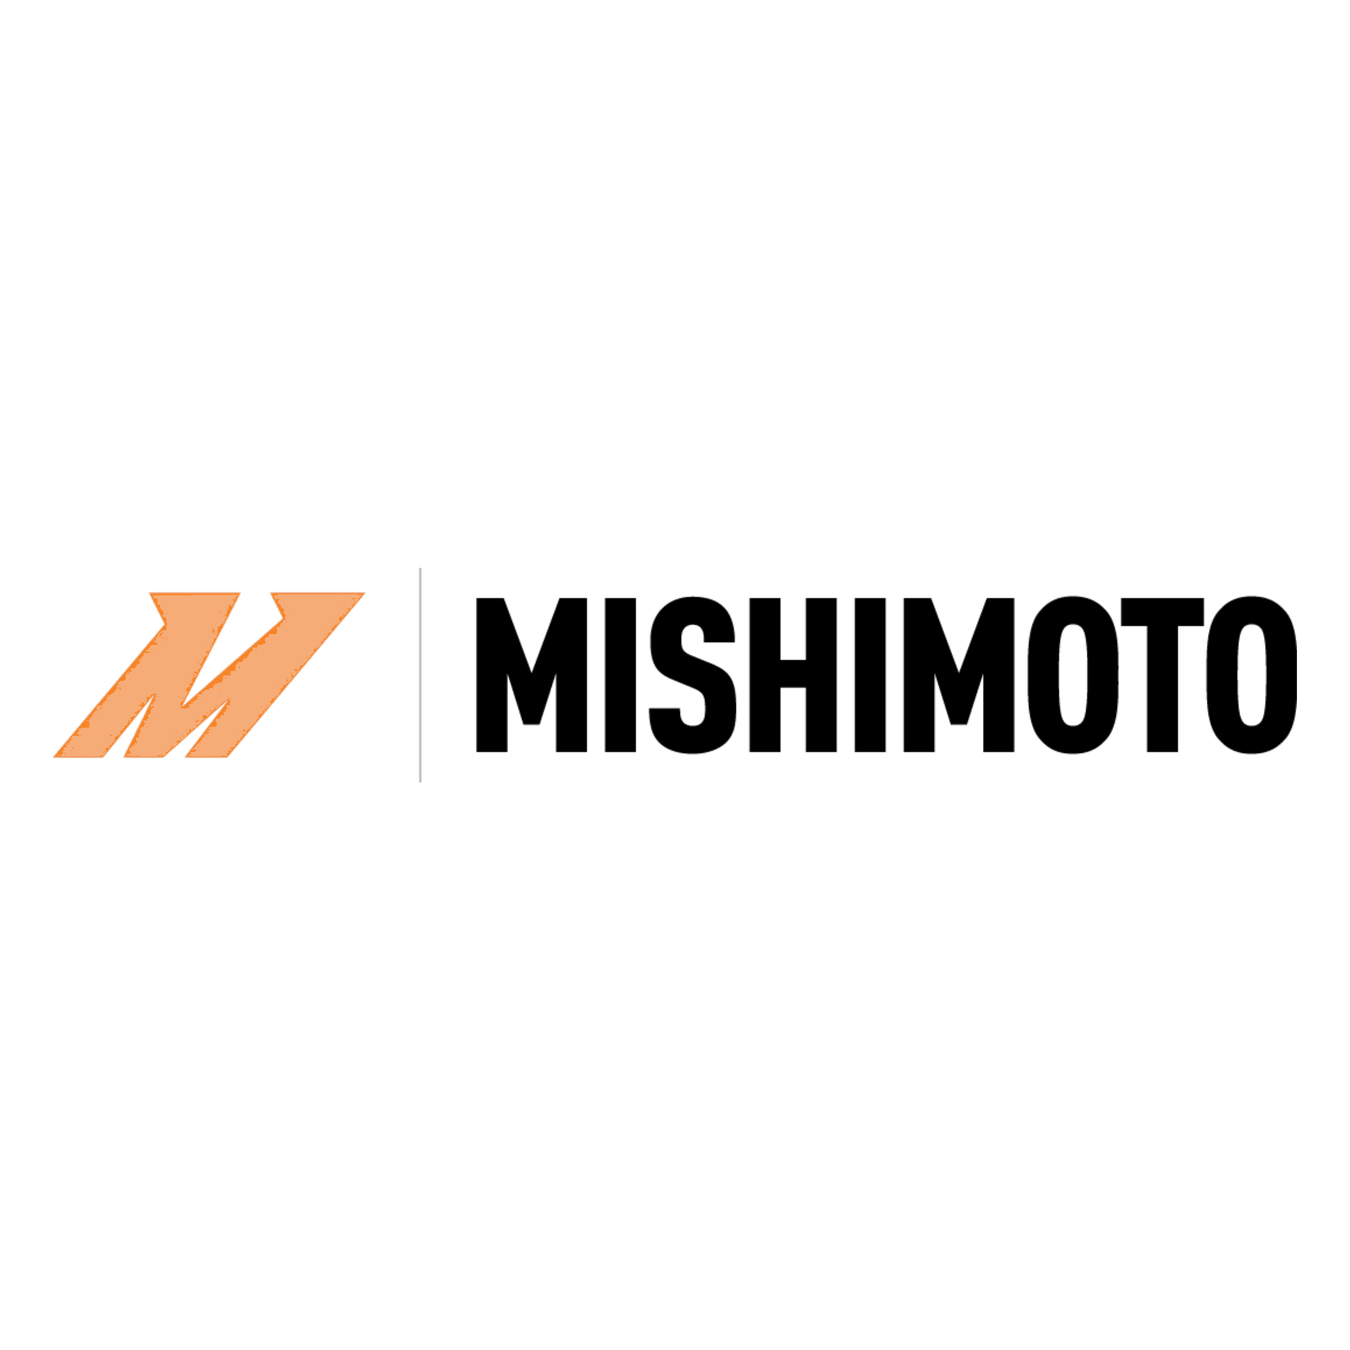 Mishimoto - OCDiesel